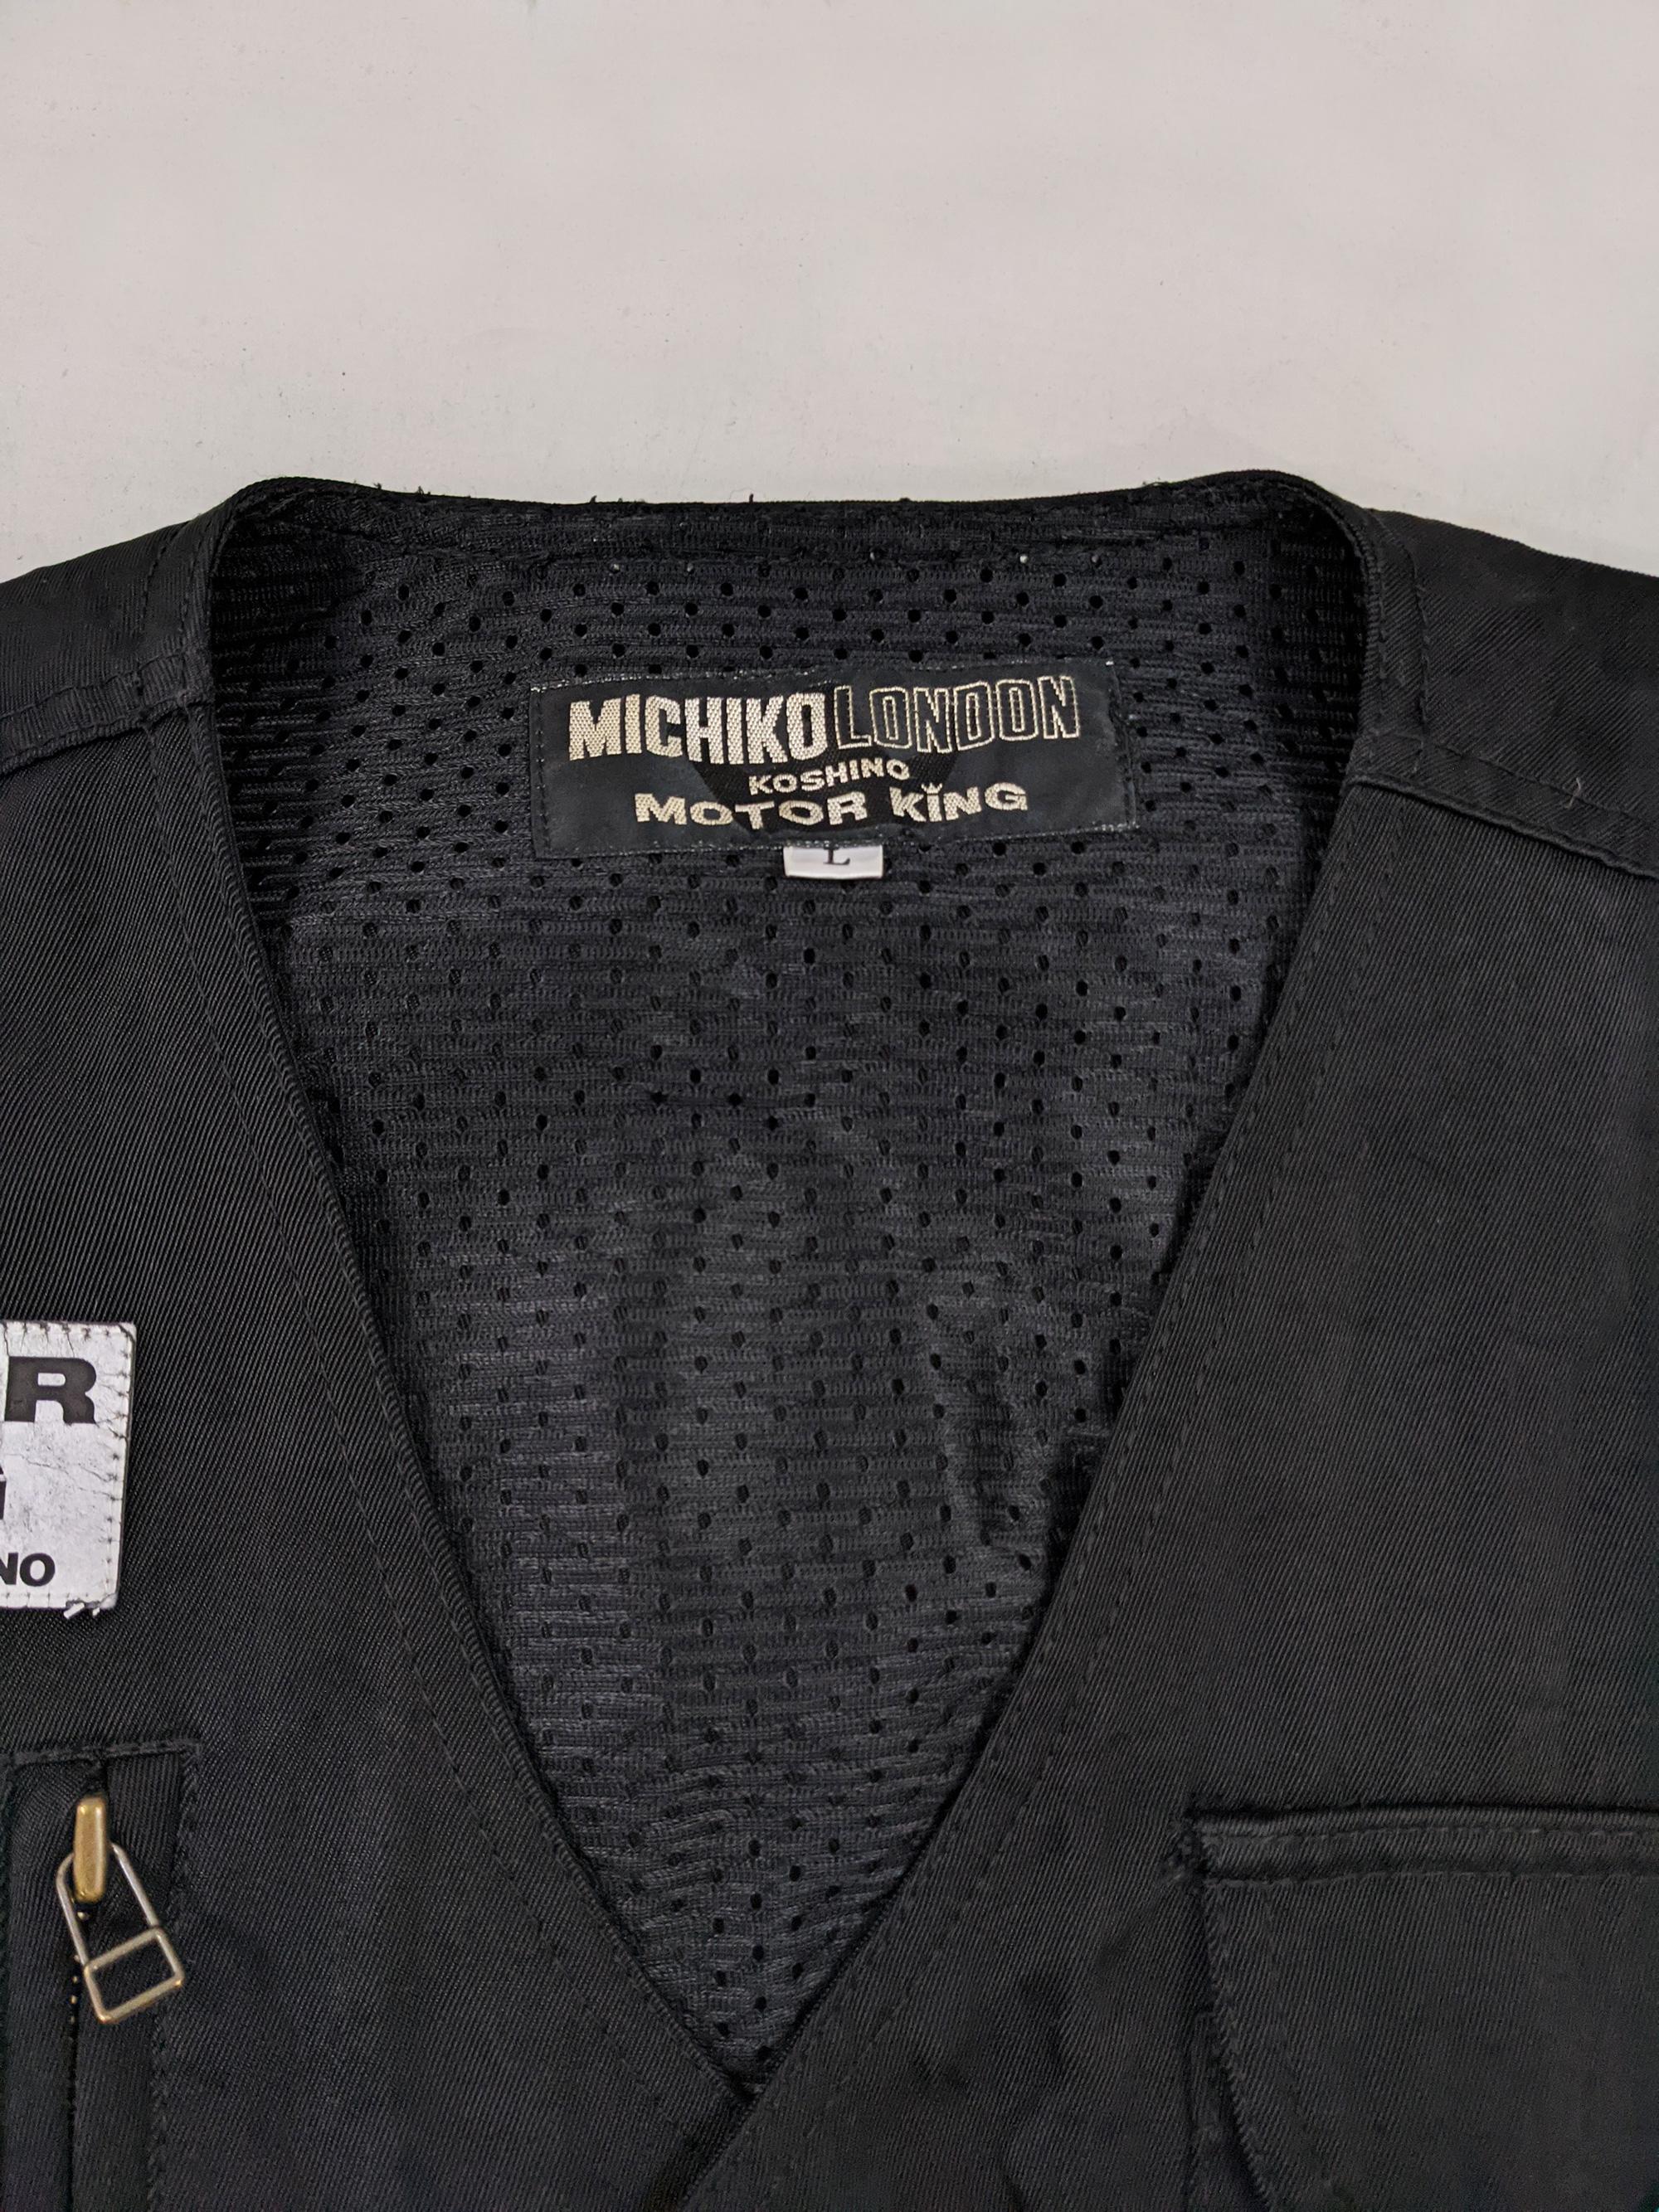 Michiko Koshino Mens 90s Rave Motorking Black Vest Sleeveless Jacket, 1990s 3